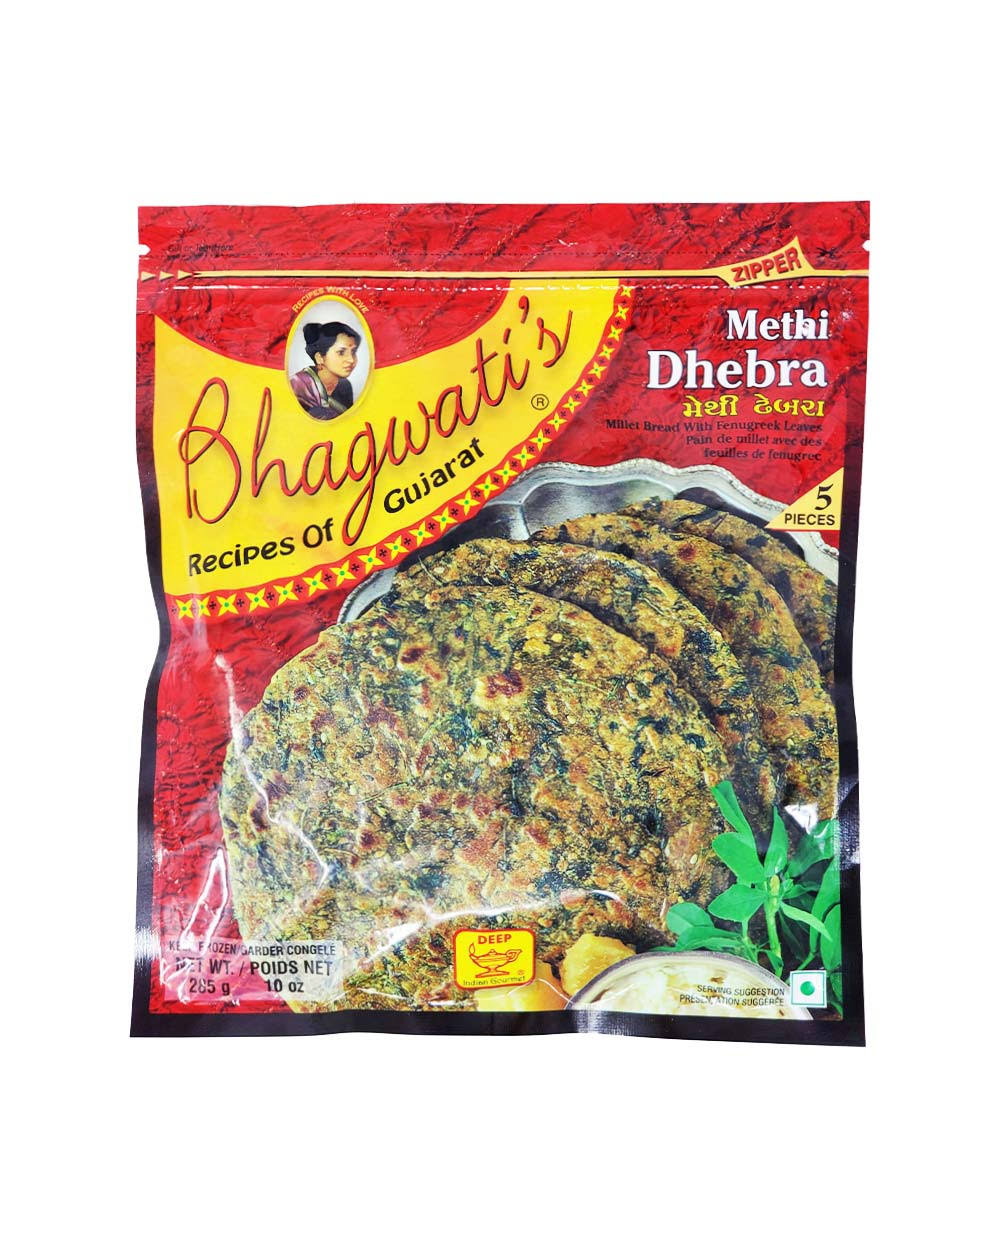 Deep Frozen Bhagwati's Methi Dhebra 285G